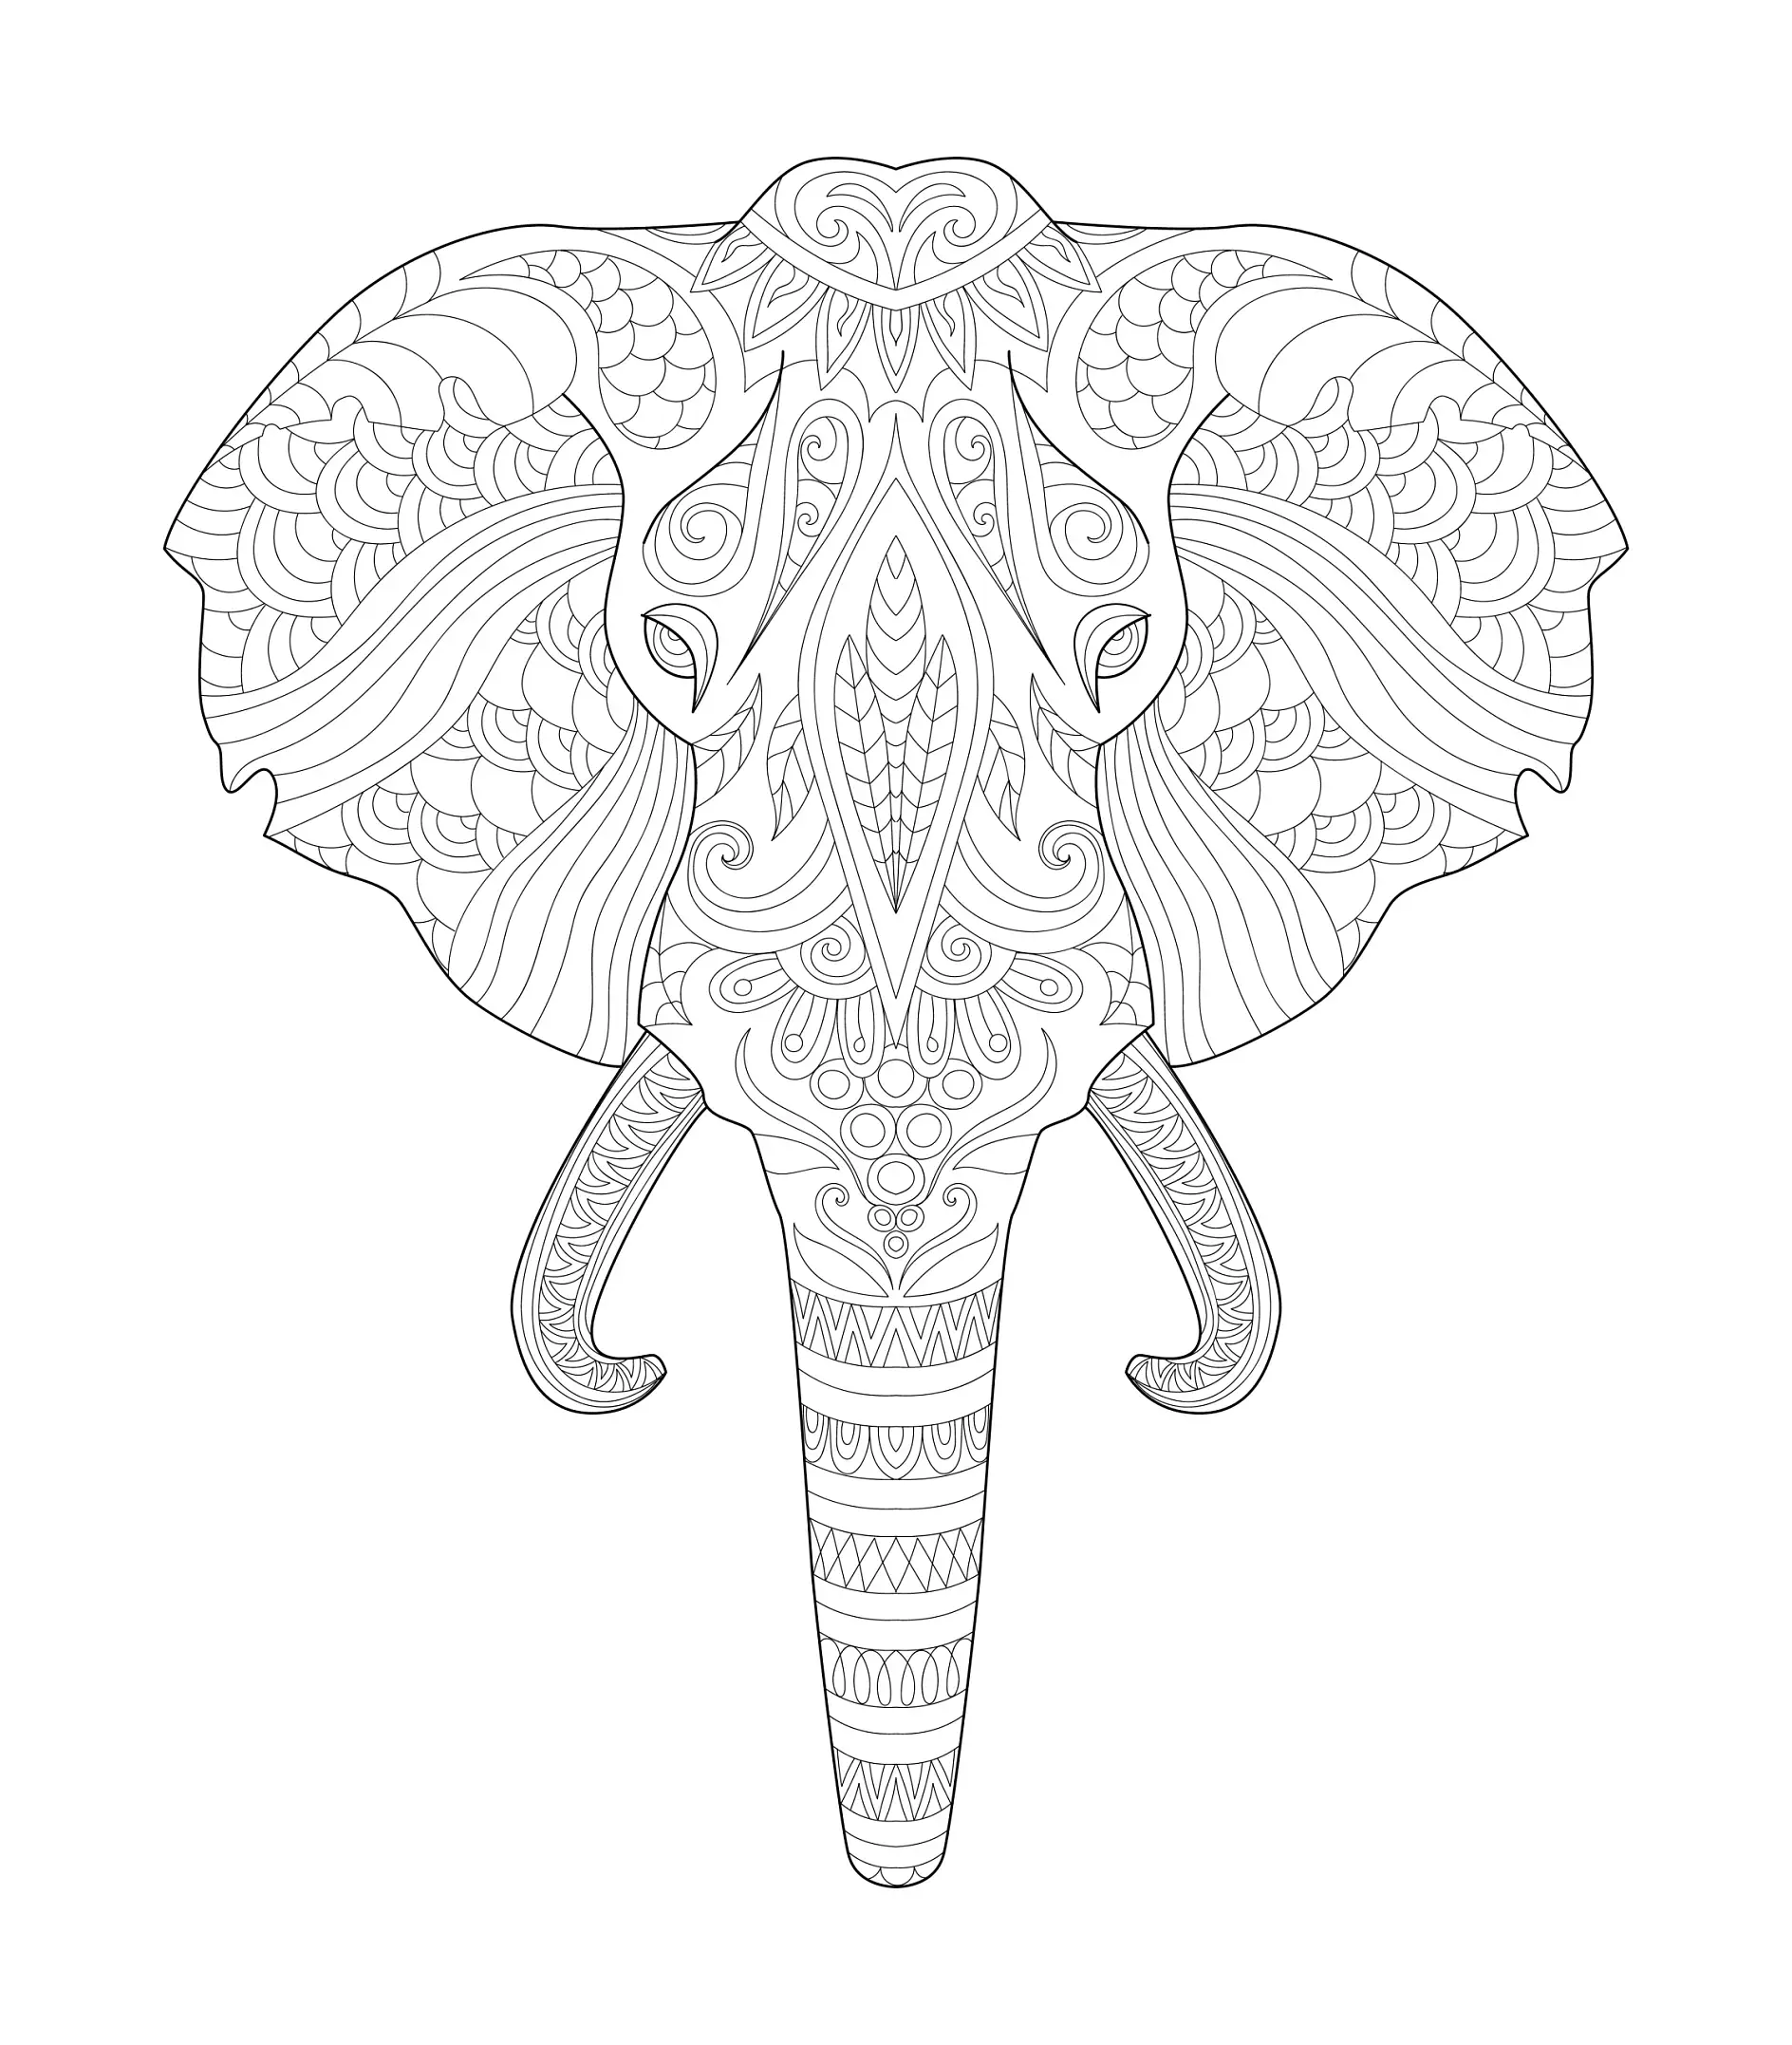 Ausmalbild Mandala Elefant mit detaillierten Mustern